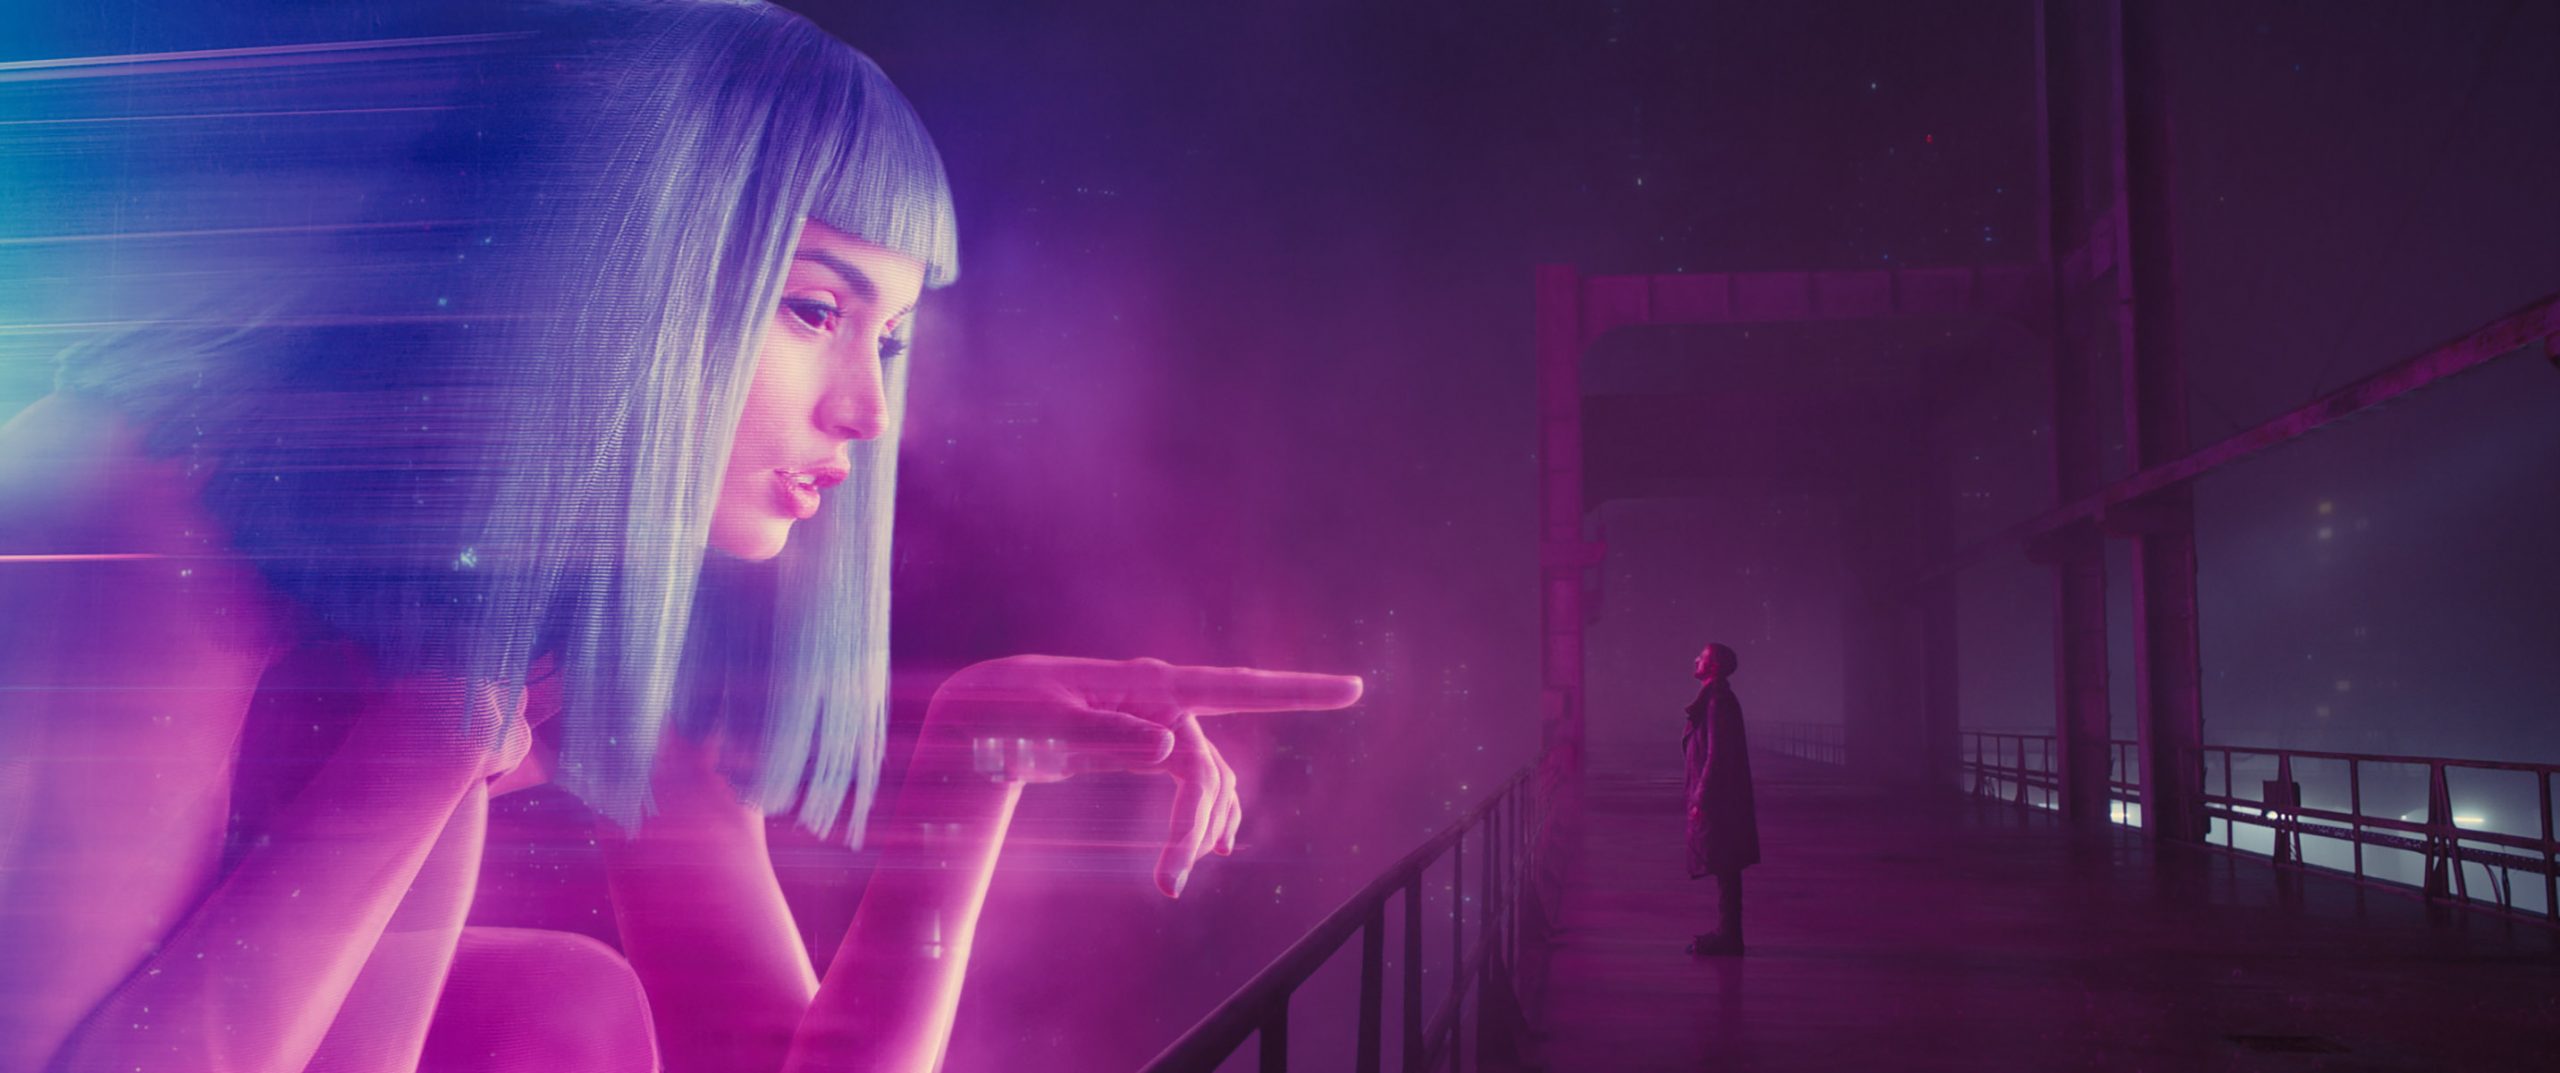 3 cortometrajes para entender mejor Blade Runner 2049